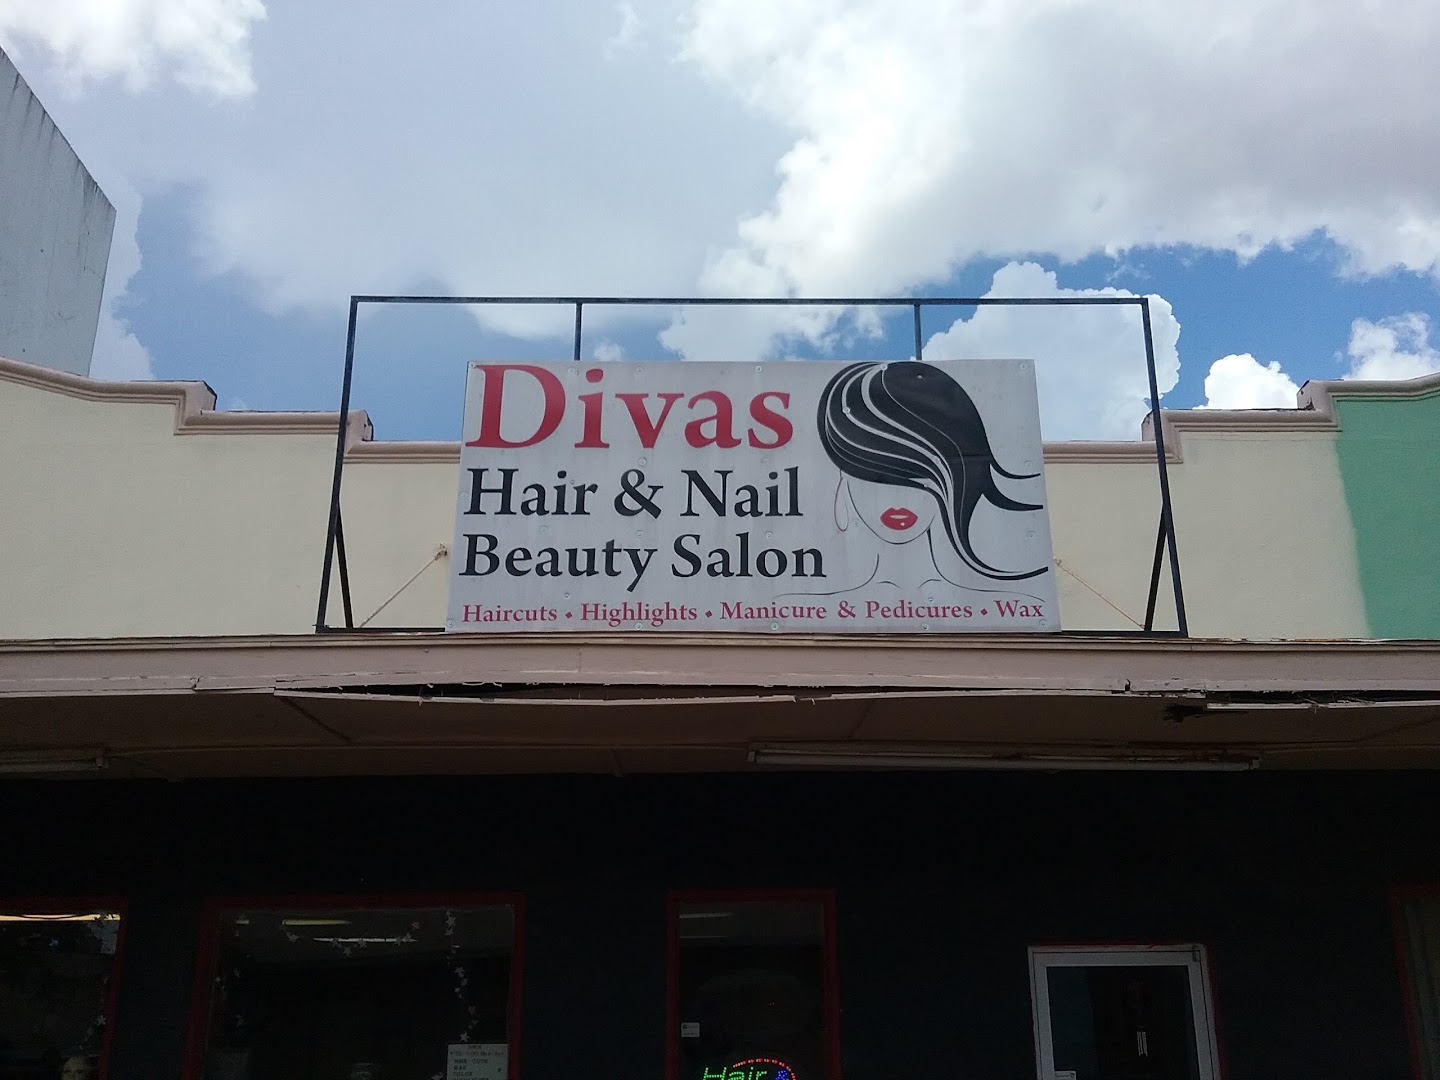 Divas Hair & Nail Beauty Salon